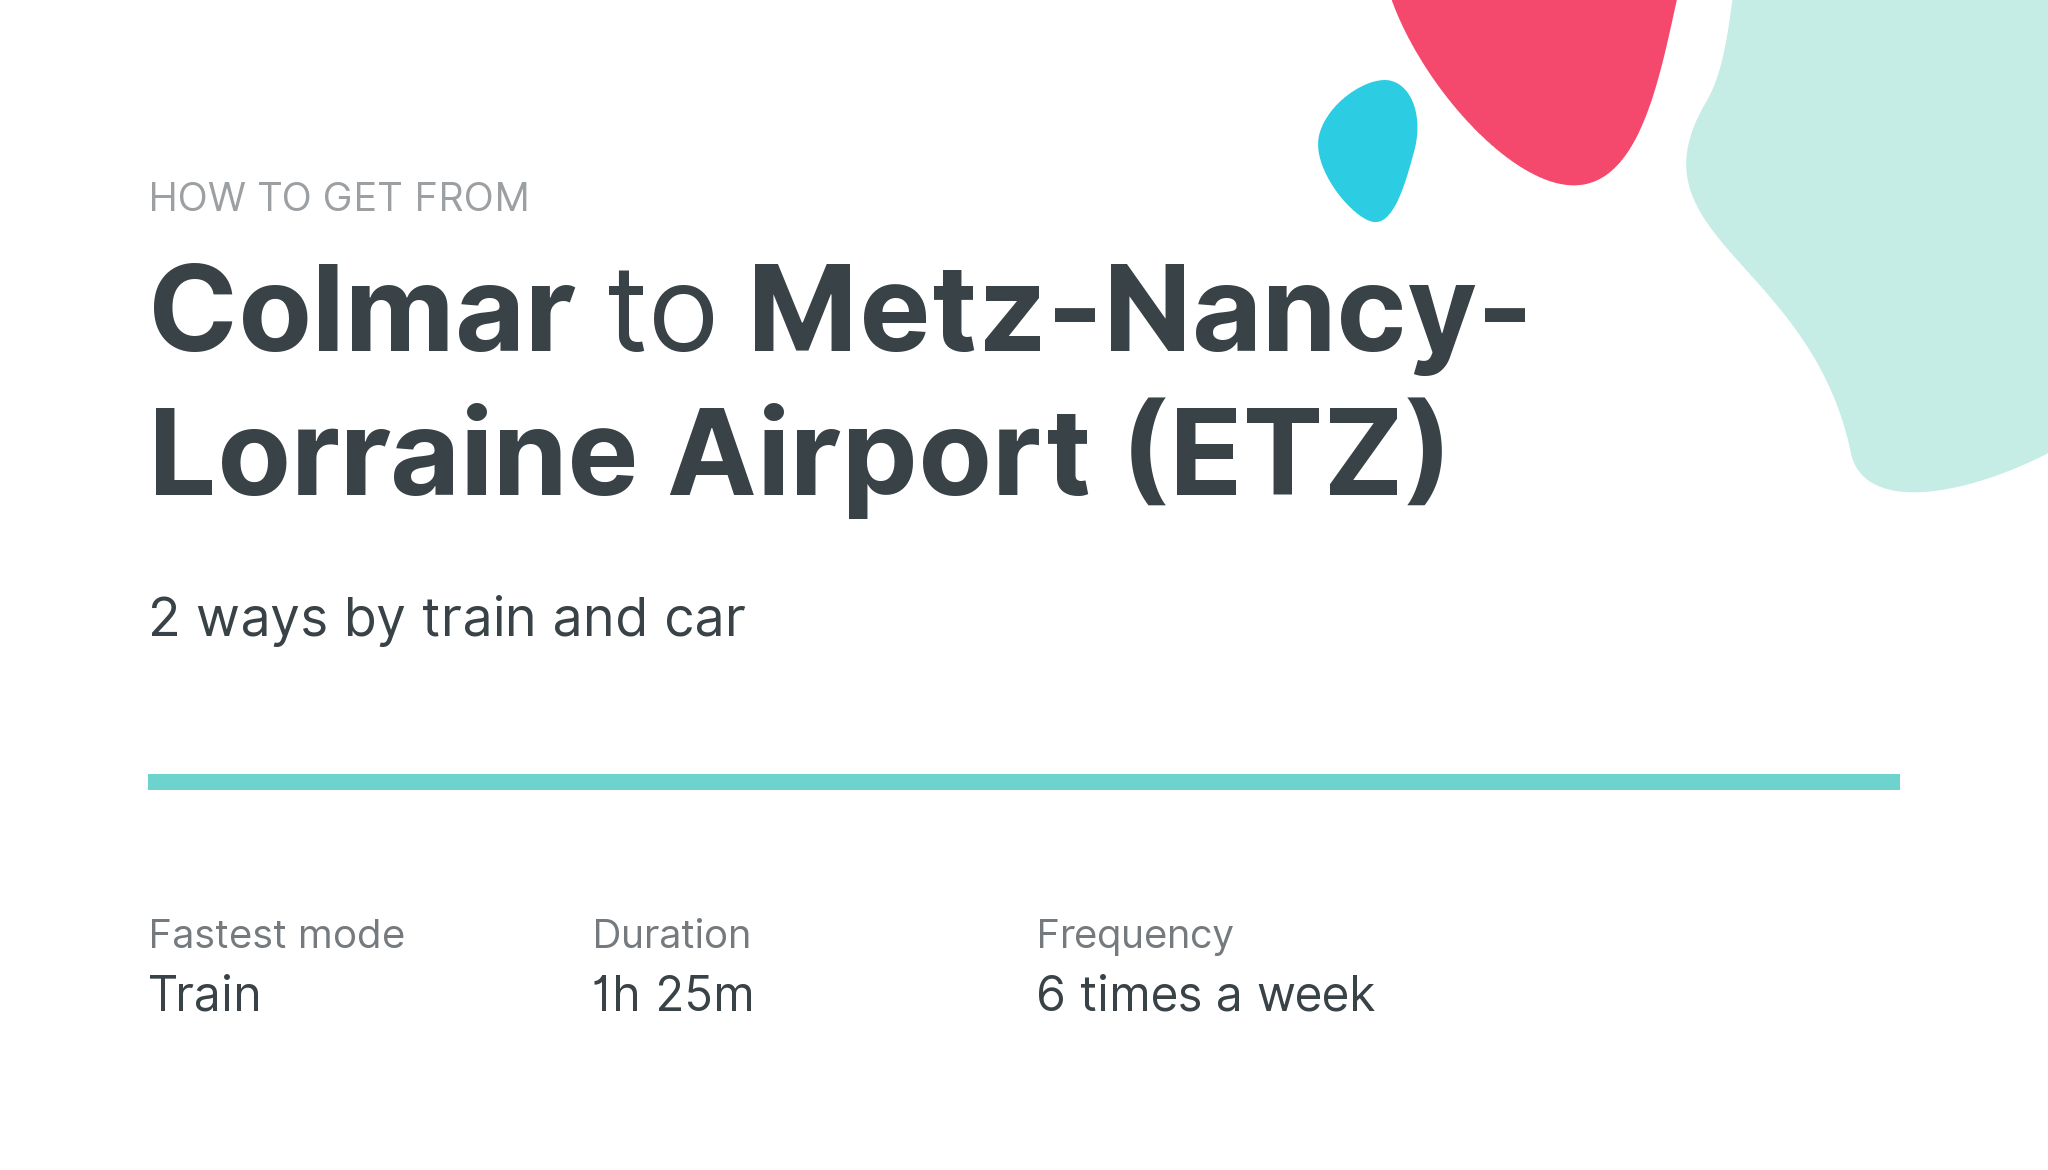 How do I get from Colmar to Metz-Nancy-Lorraine Airport (ETZ)